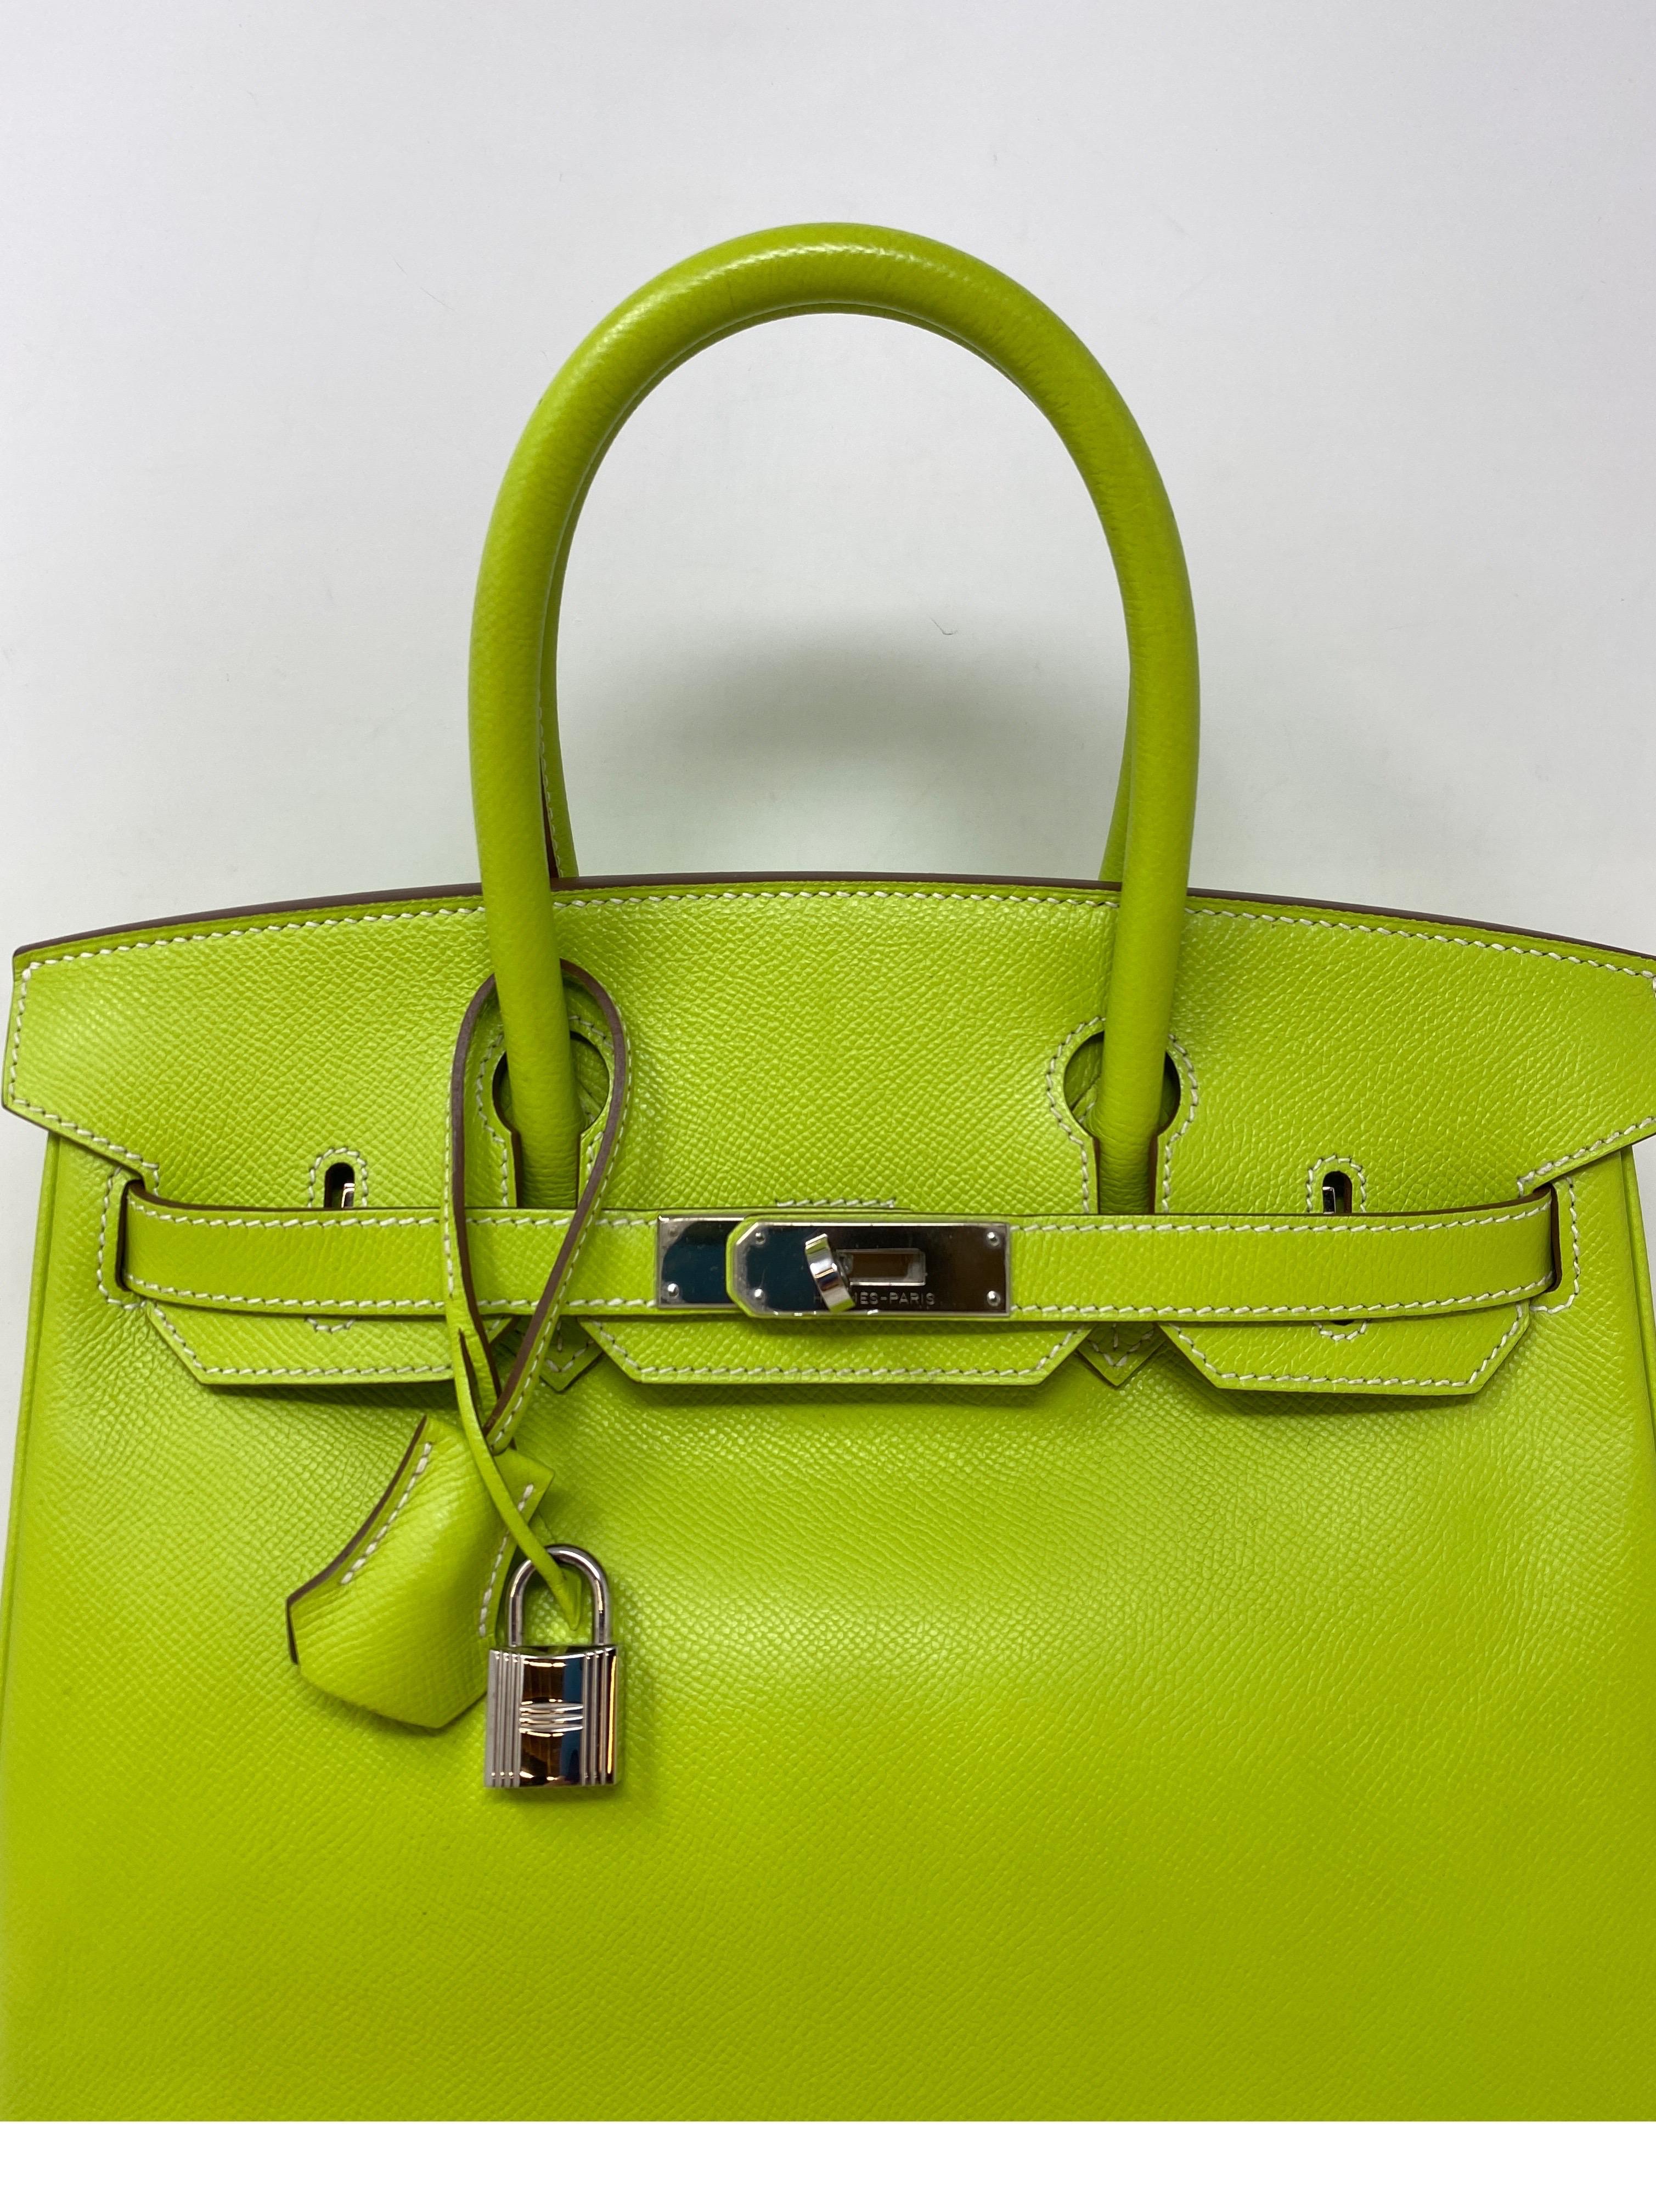 Hermes Kiwi Birkin 30 Bag. Lichen green interior. Candy bag. Interior different color. Palladium hardware. Good condition. Light corner wear. Interior clean. Rare bright yellow/ neon green color. Guaranteed authentic. 